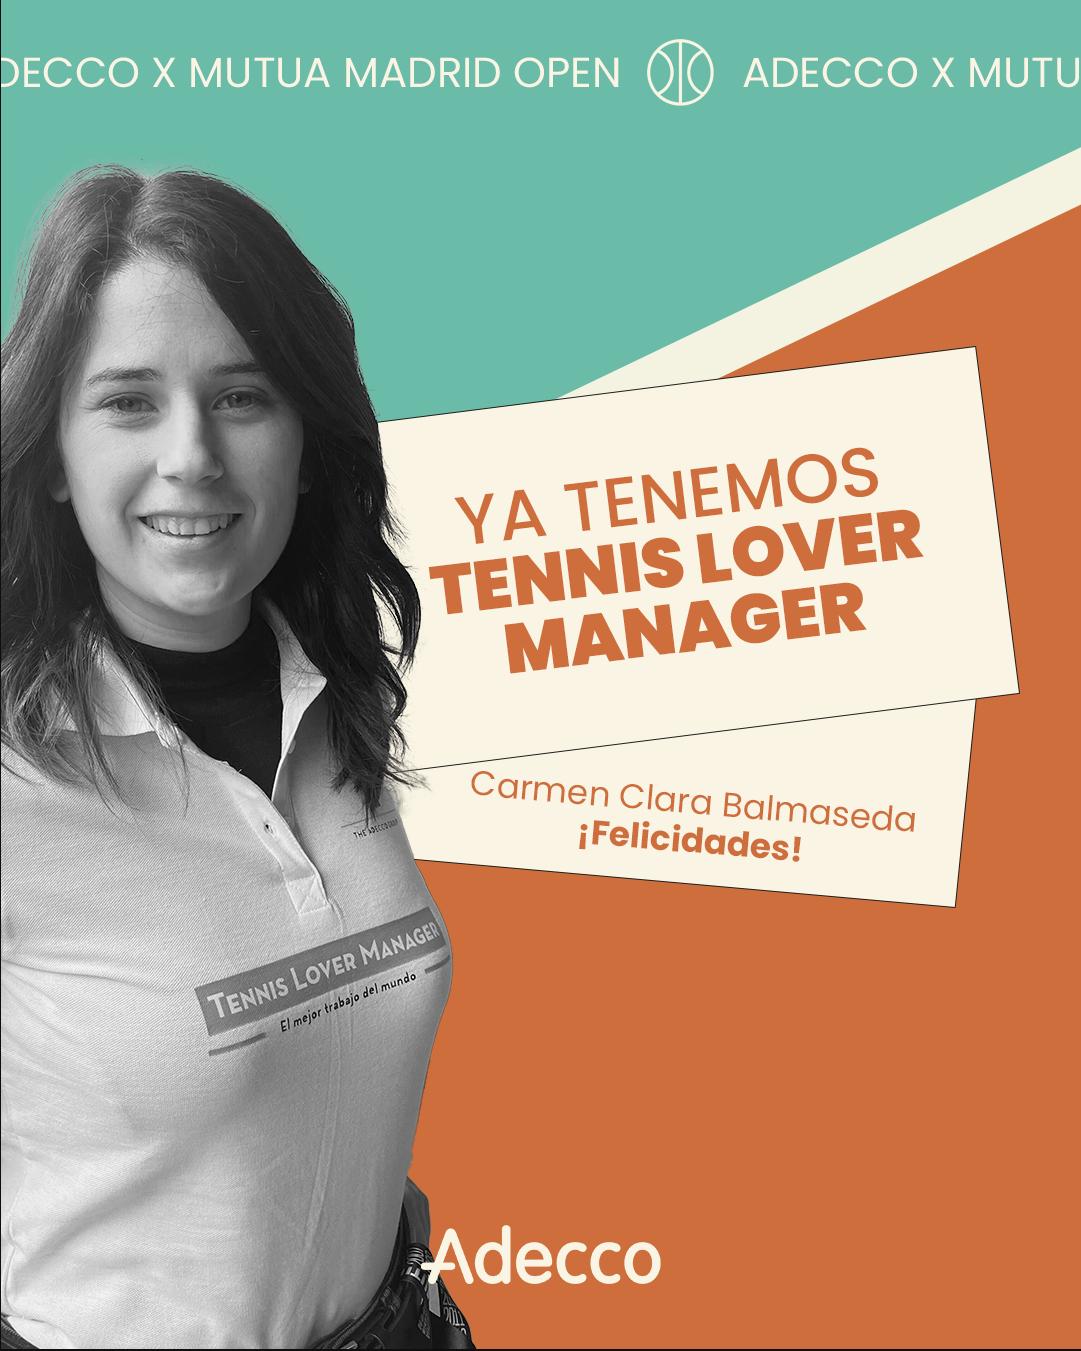 Carmen Balmaseda Tennis Lover Manager del Mutua Madrid Open